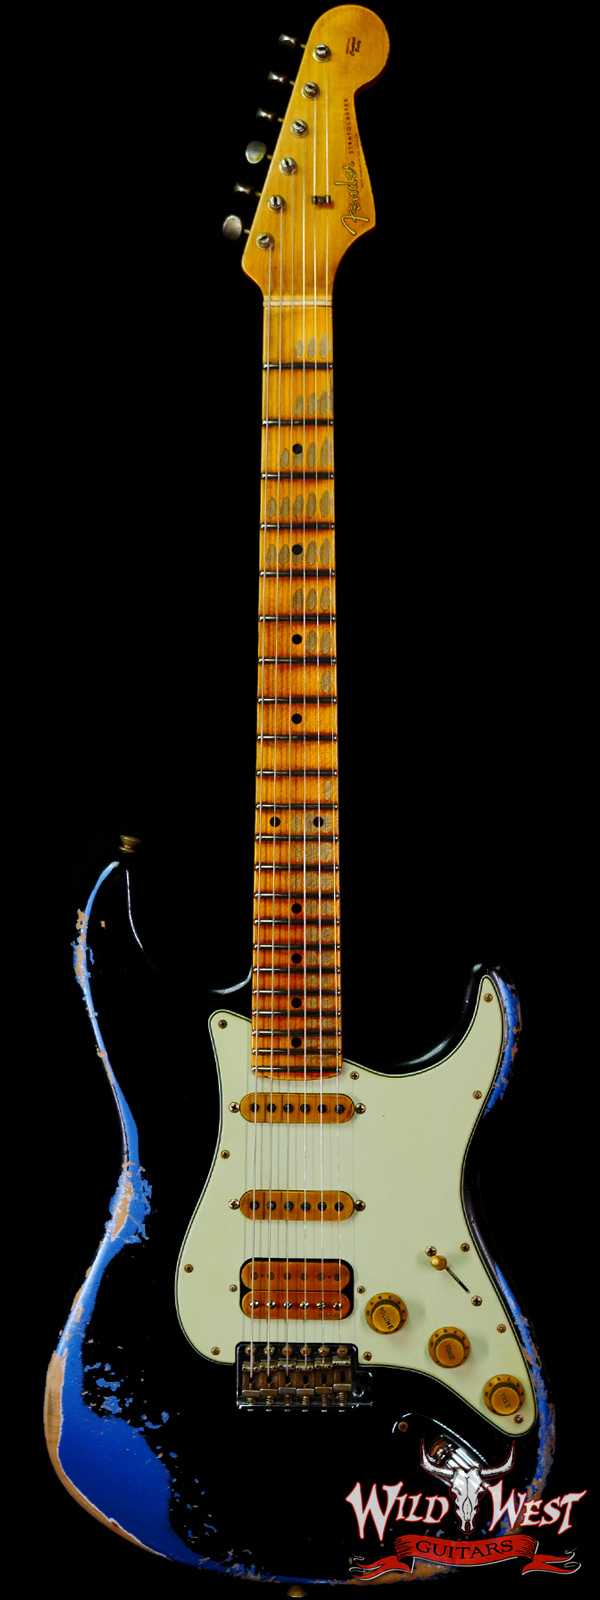 Fender Custom Shop Wild West Black Lightning 2.0 Stratocaster HSS Rosewood Board 22 Frets Heavy Relic Lake Placid Blue